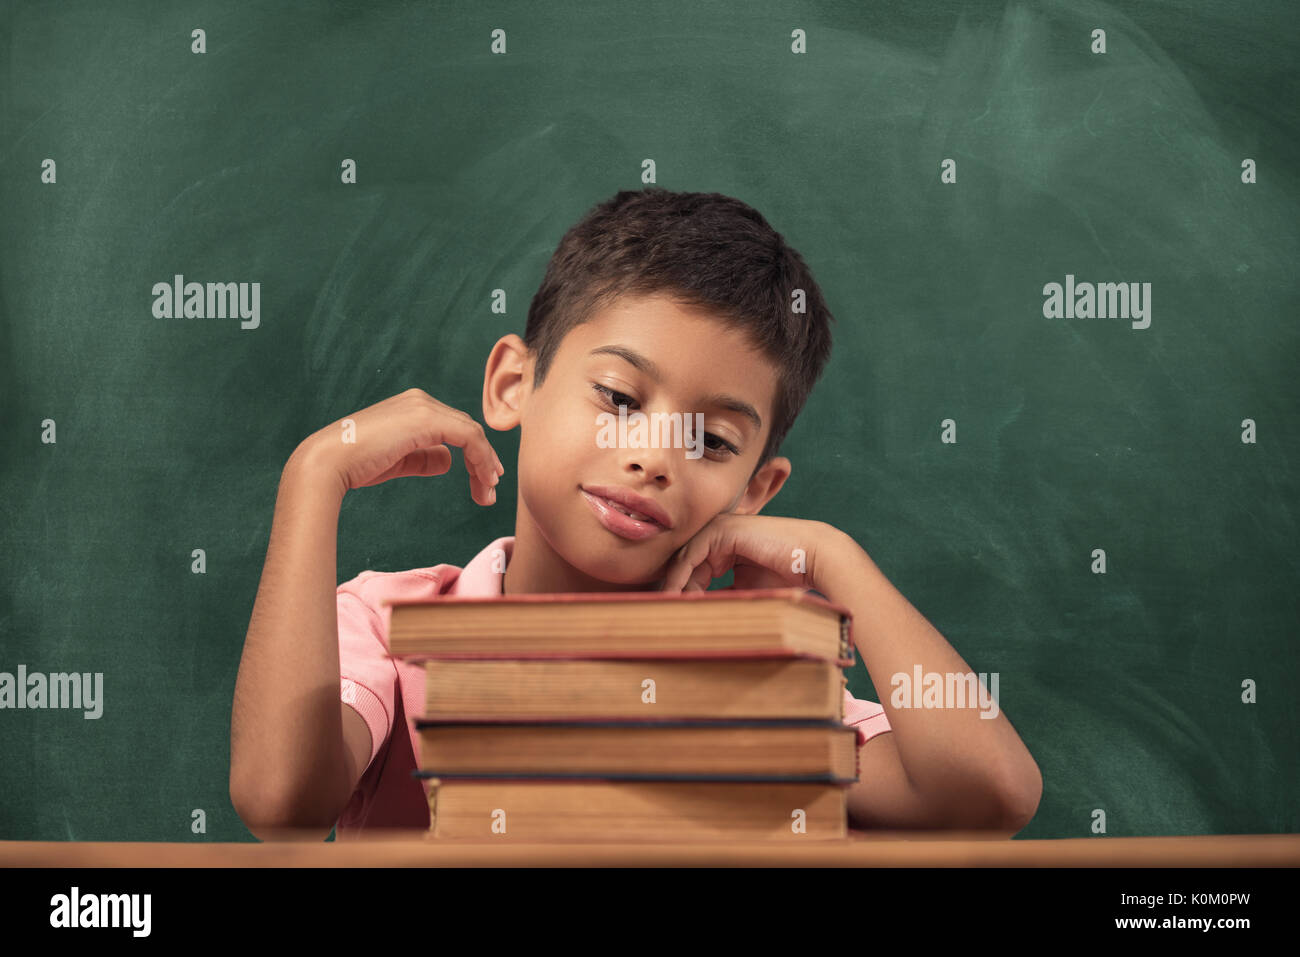 School Child Education Book on Blackboard Background Stock Photo